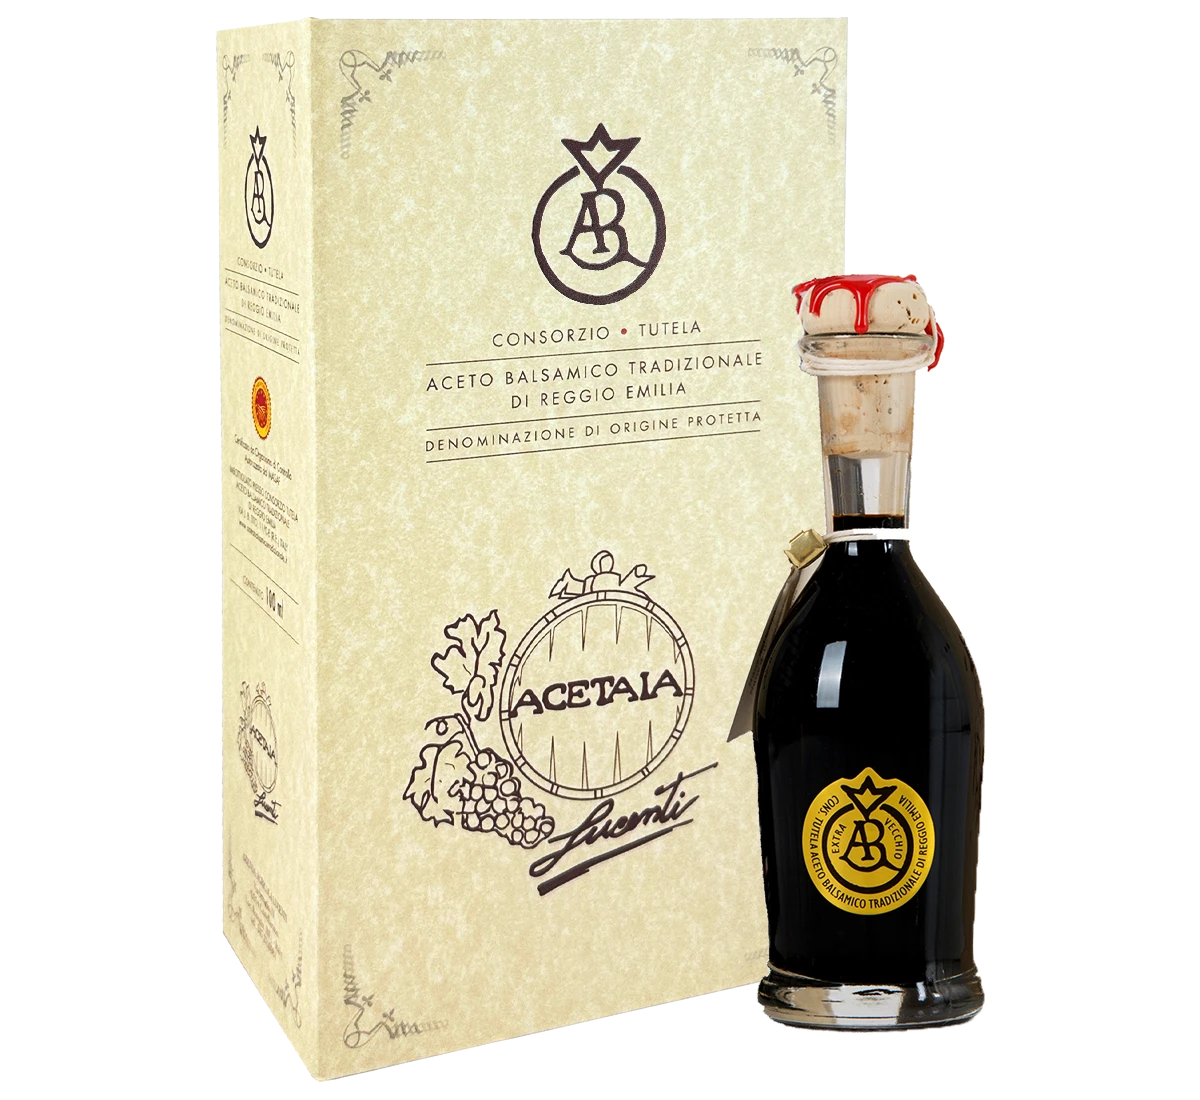 Traditional Balsamic Vinegar of Reggio Emilia PDO - Gold - Over 25 Years (100 ml. / 3.38 fl. oz.)